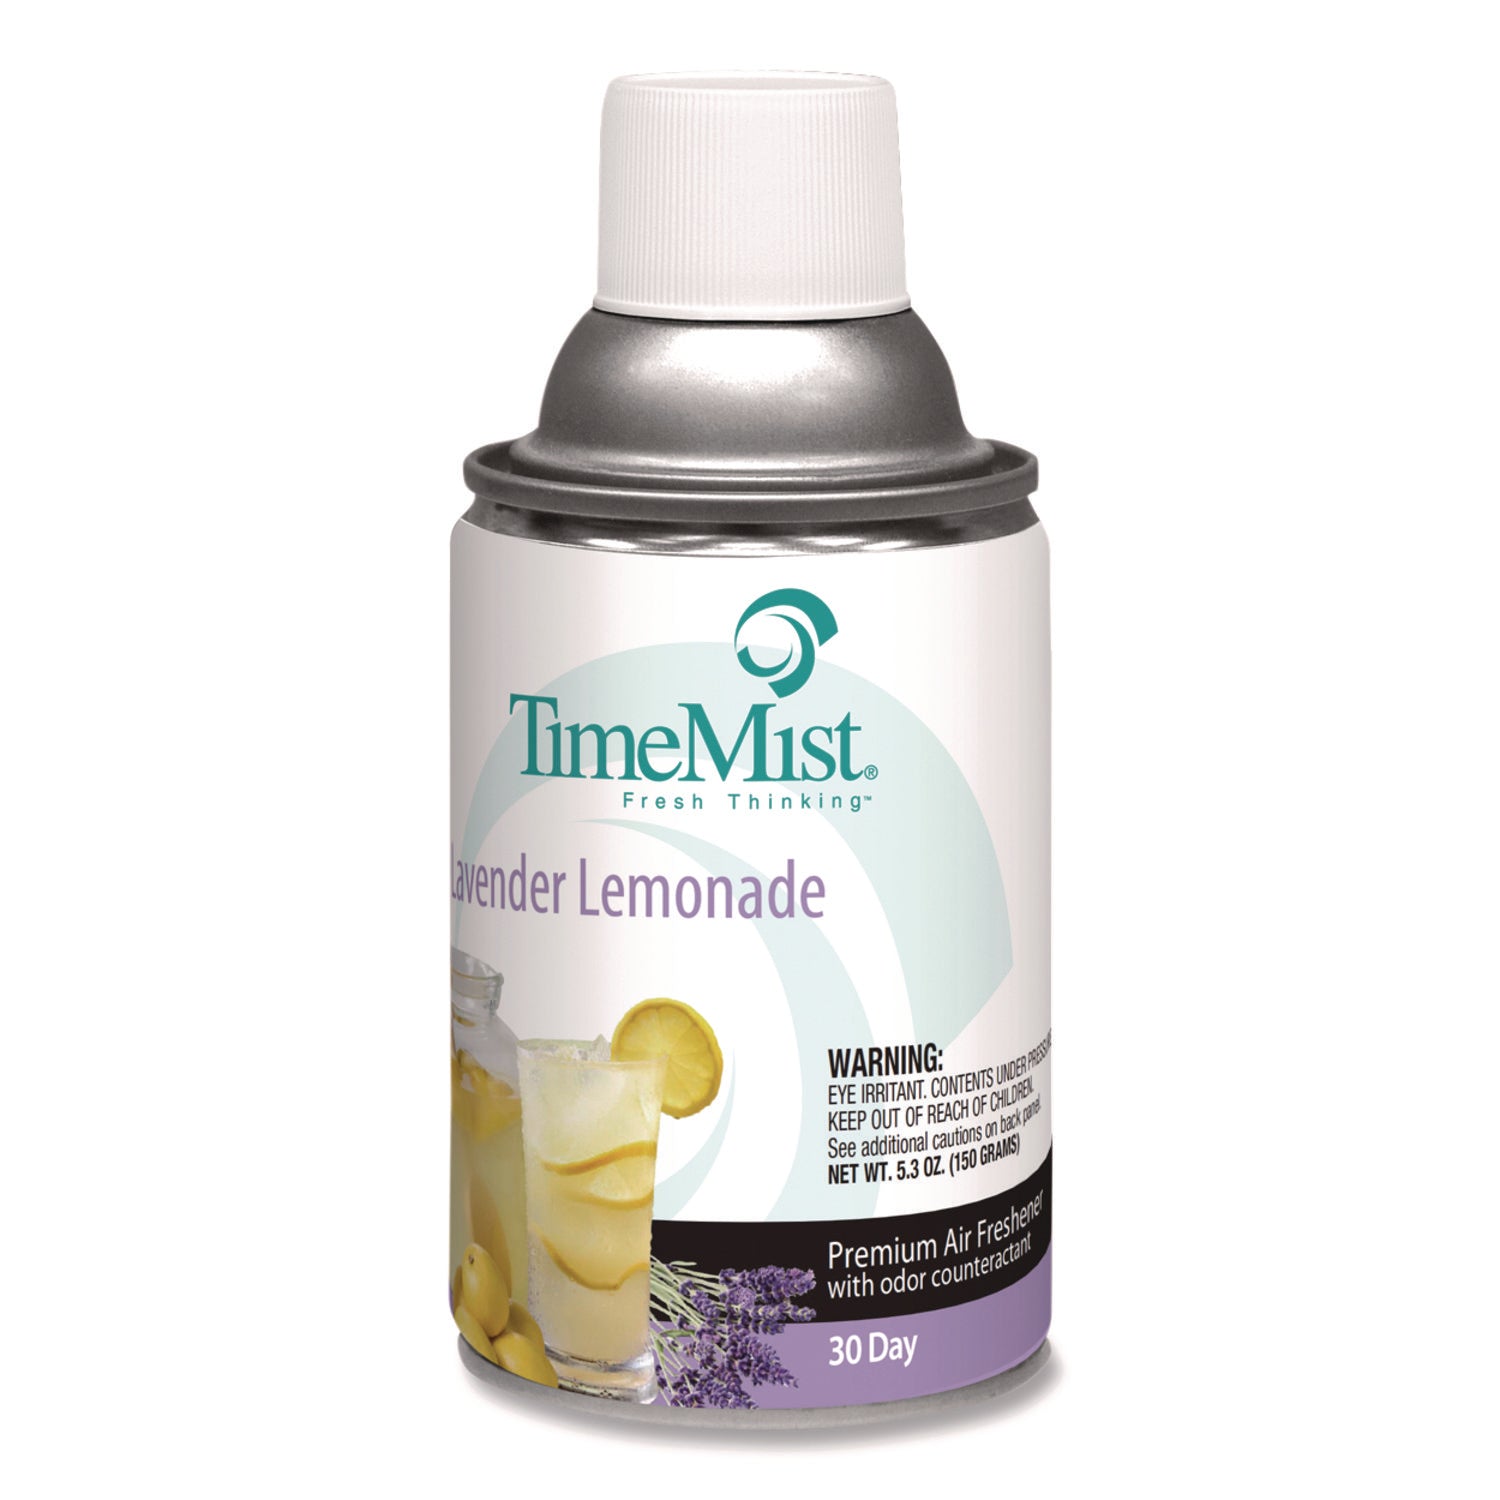 Premium Metered Air Freshener Refill, Lavender Lemonade, 5.3 oz Aerosol Spray - 1